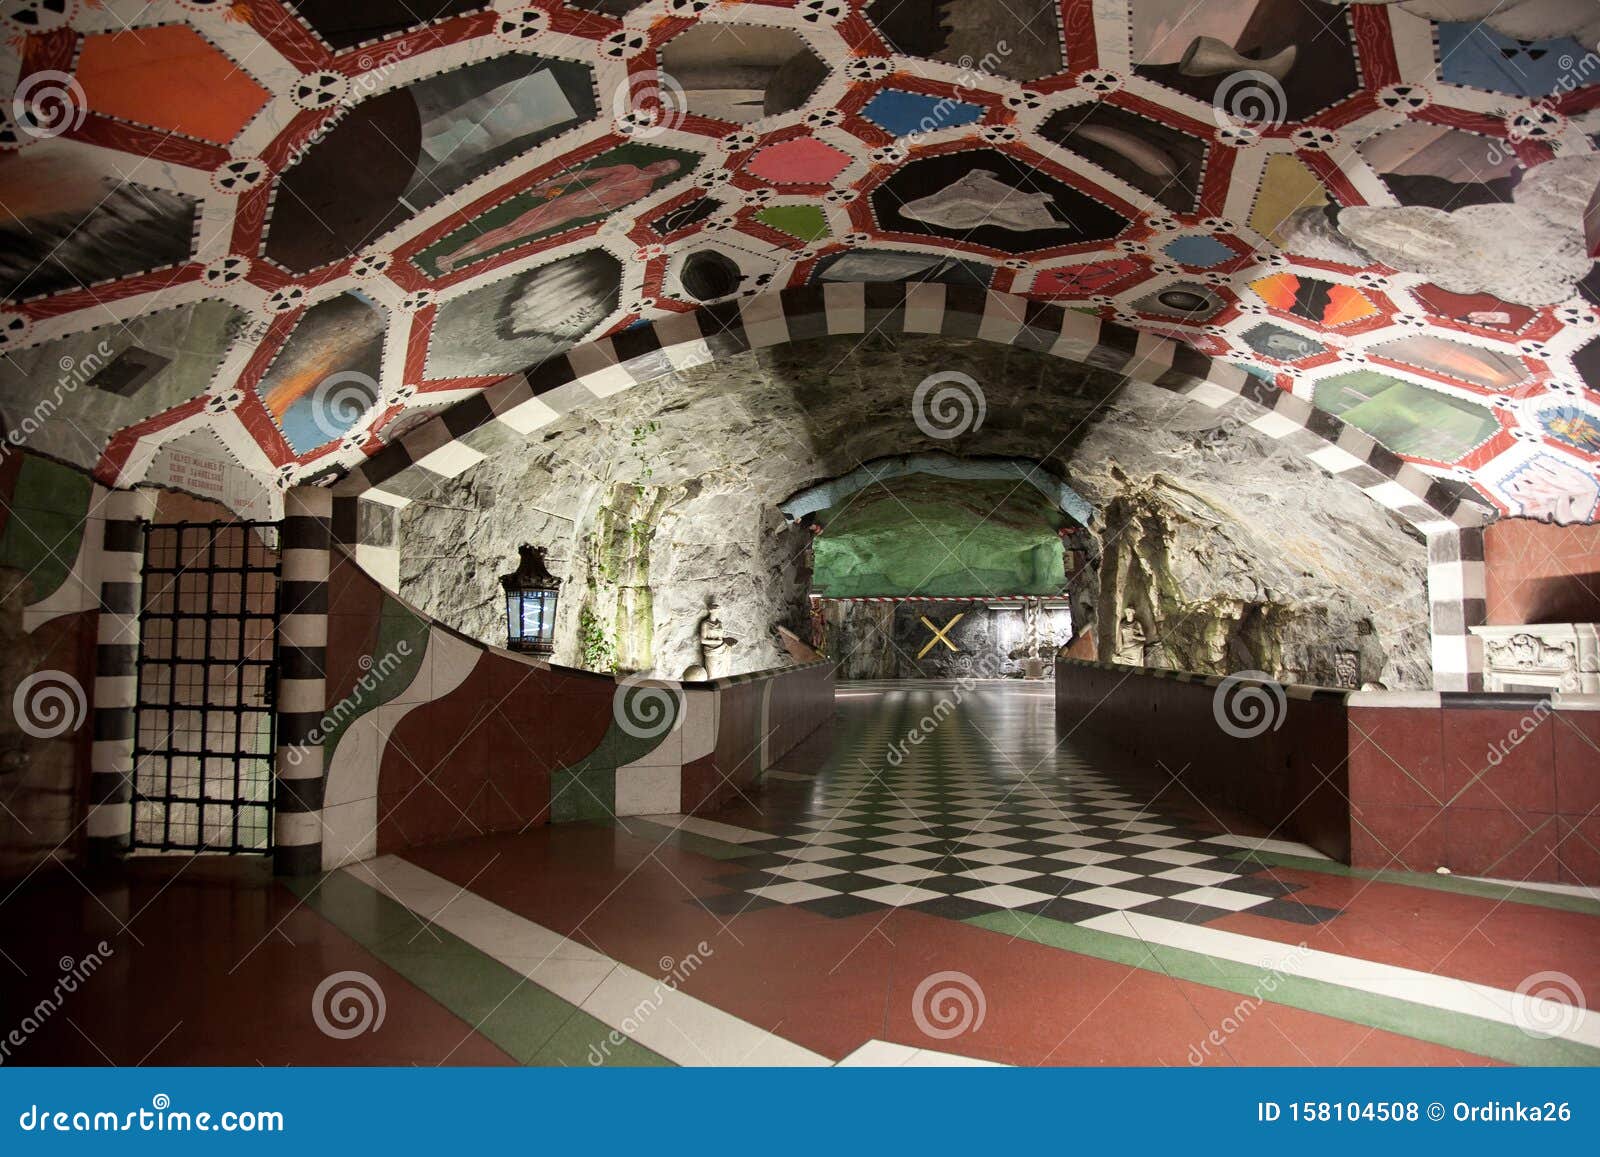 Subway Underground In City Stockholm Sweden Stock Photo Image